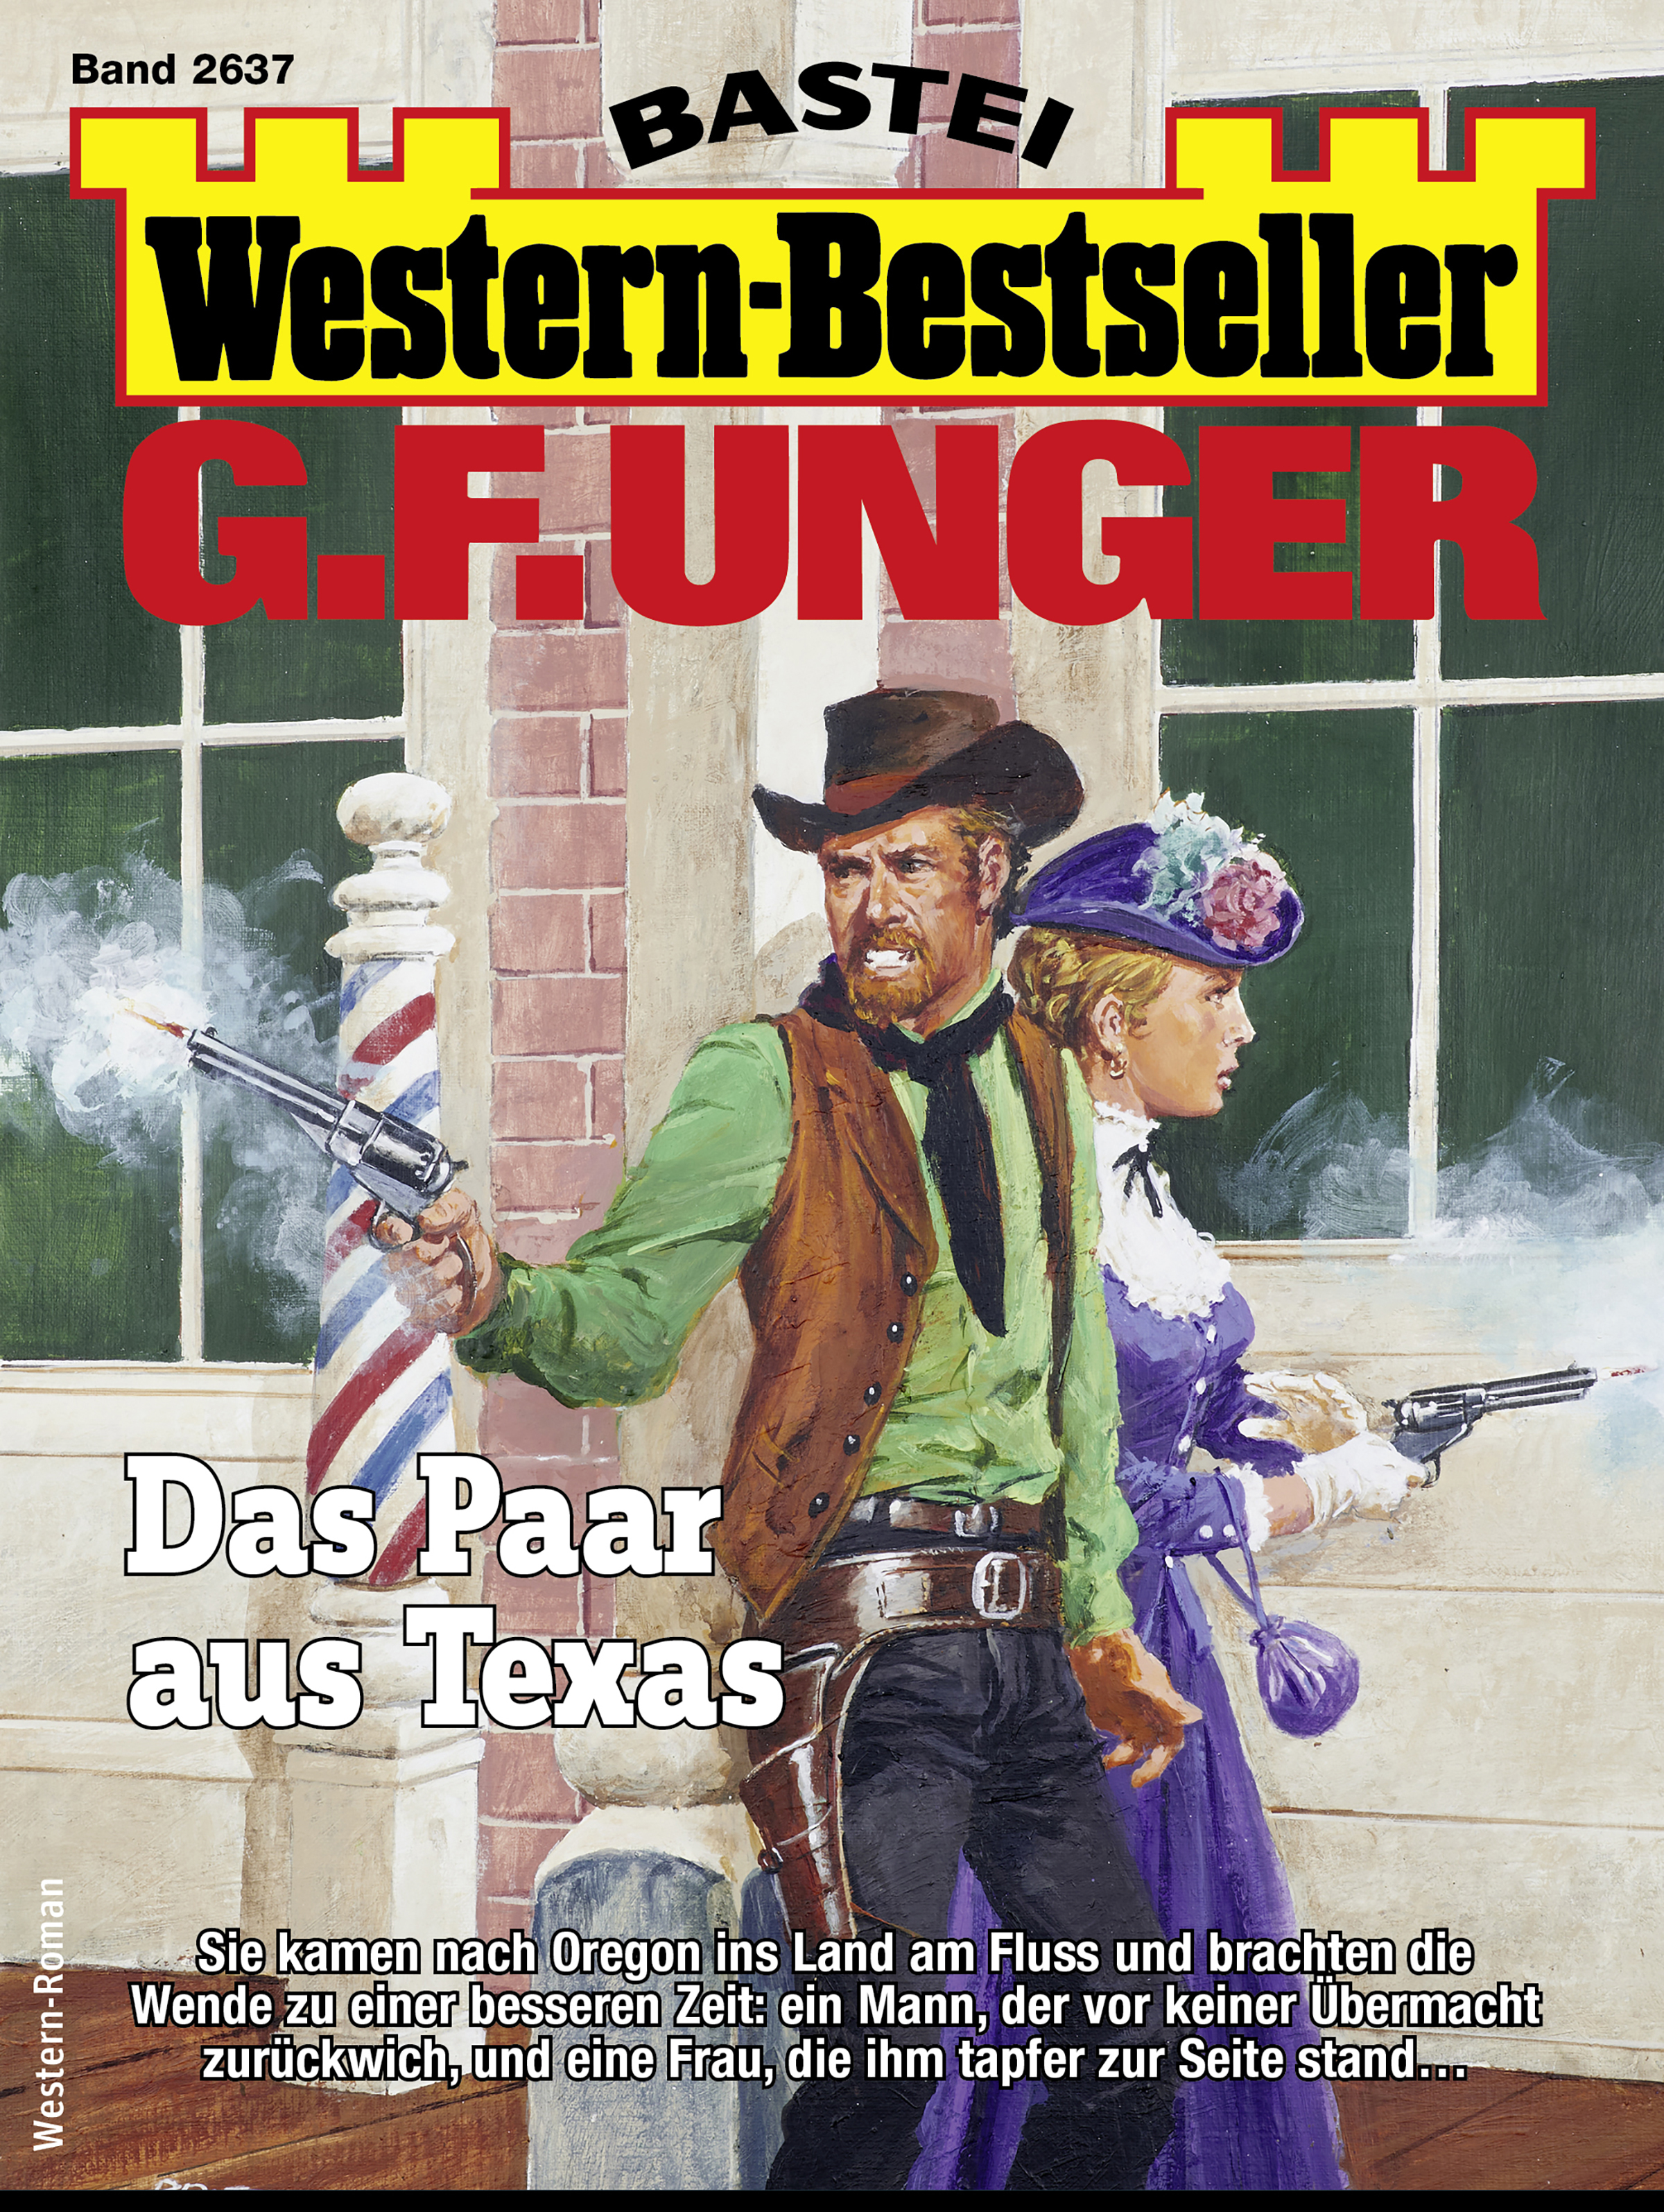 G. F. Unger Western-Bestseller